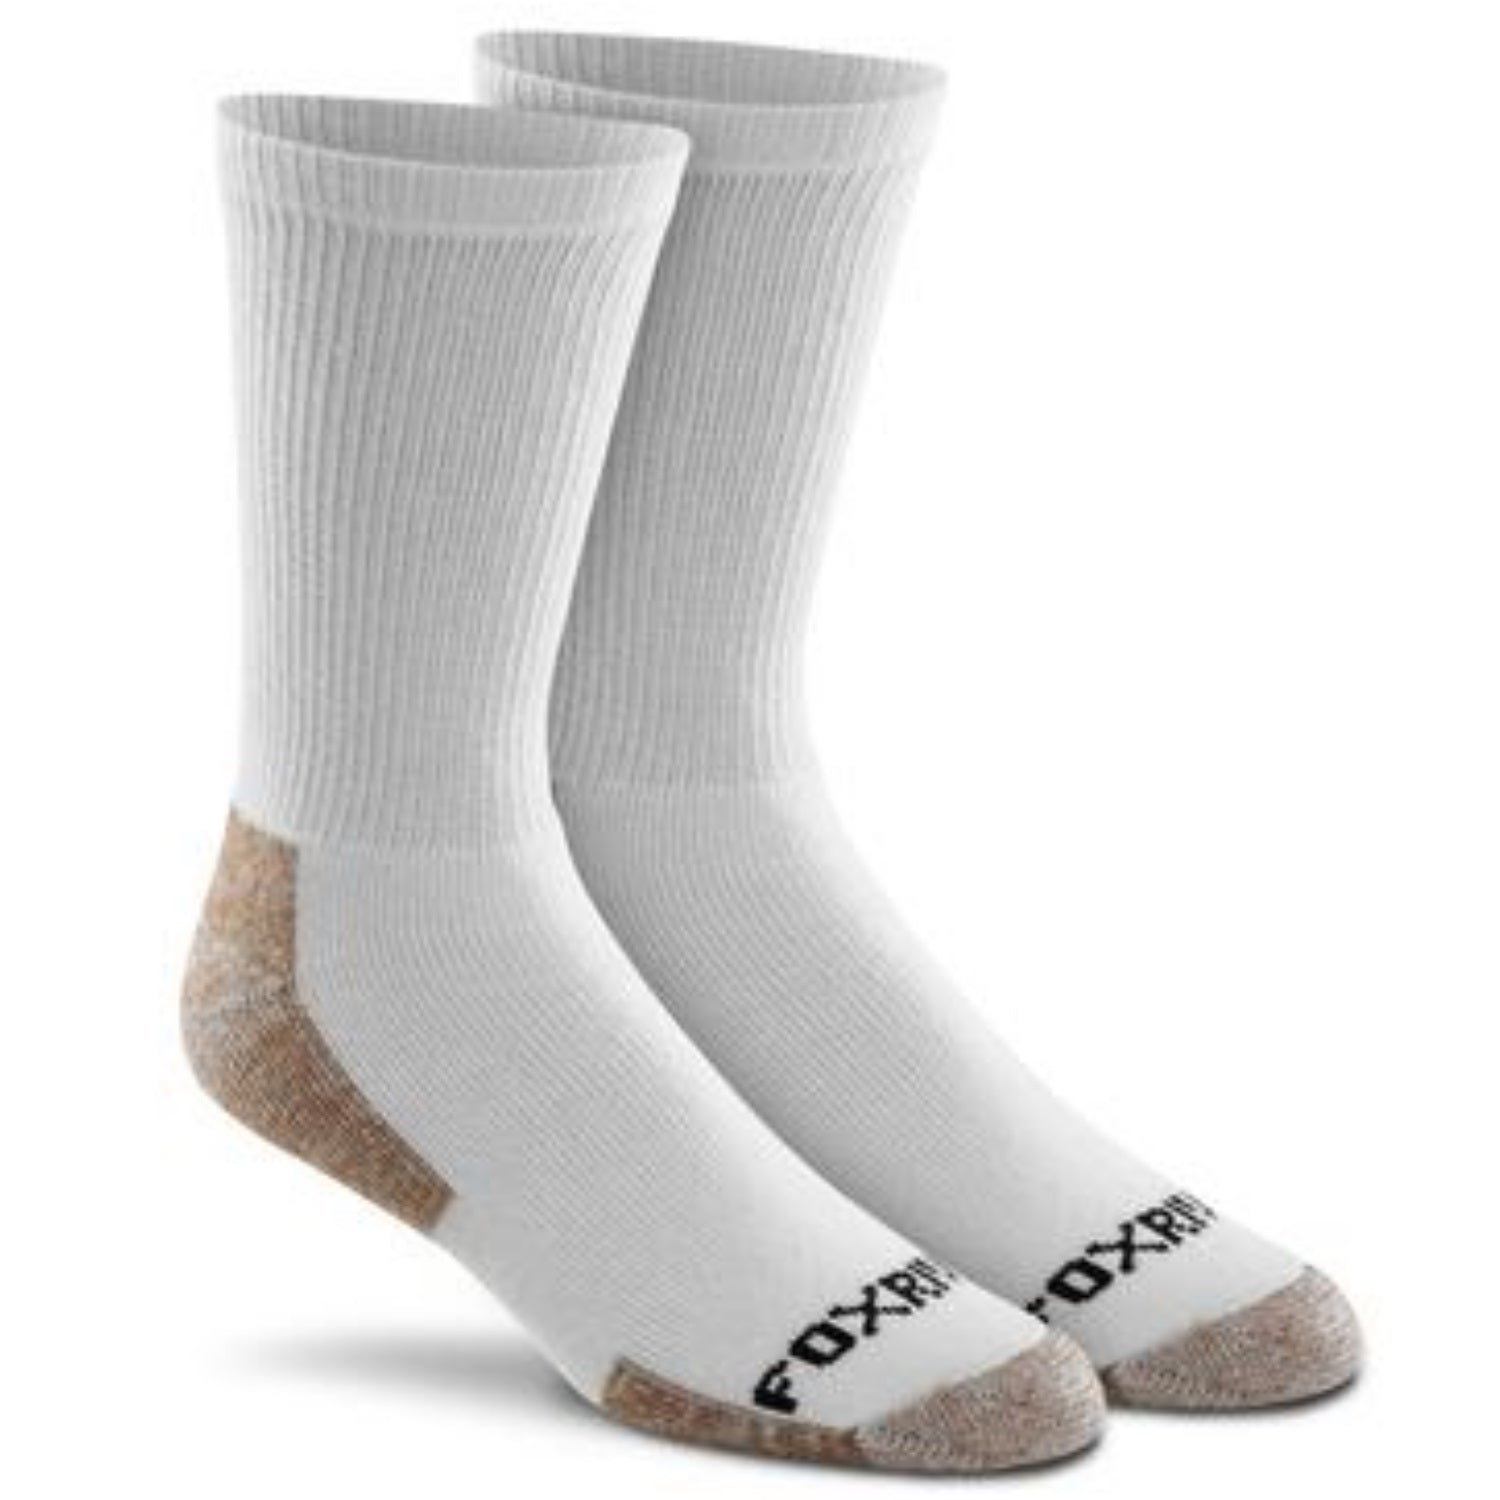 Fox River Socks - Cotton Crew Value Pack (3-Pack) - Unisex